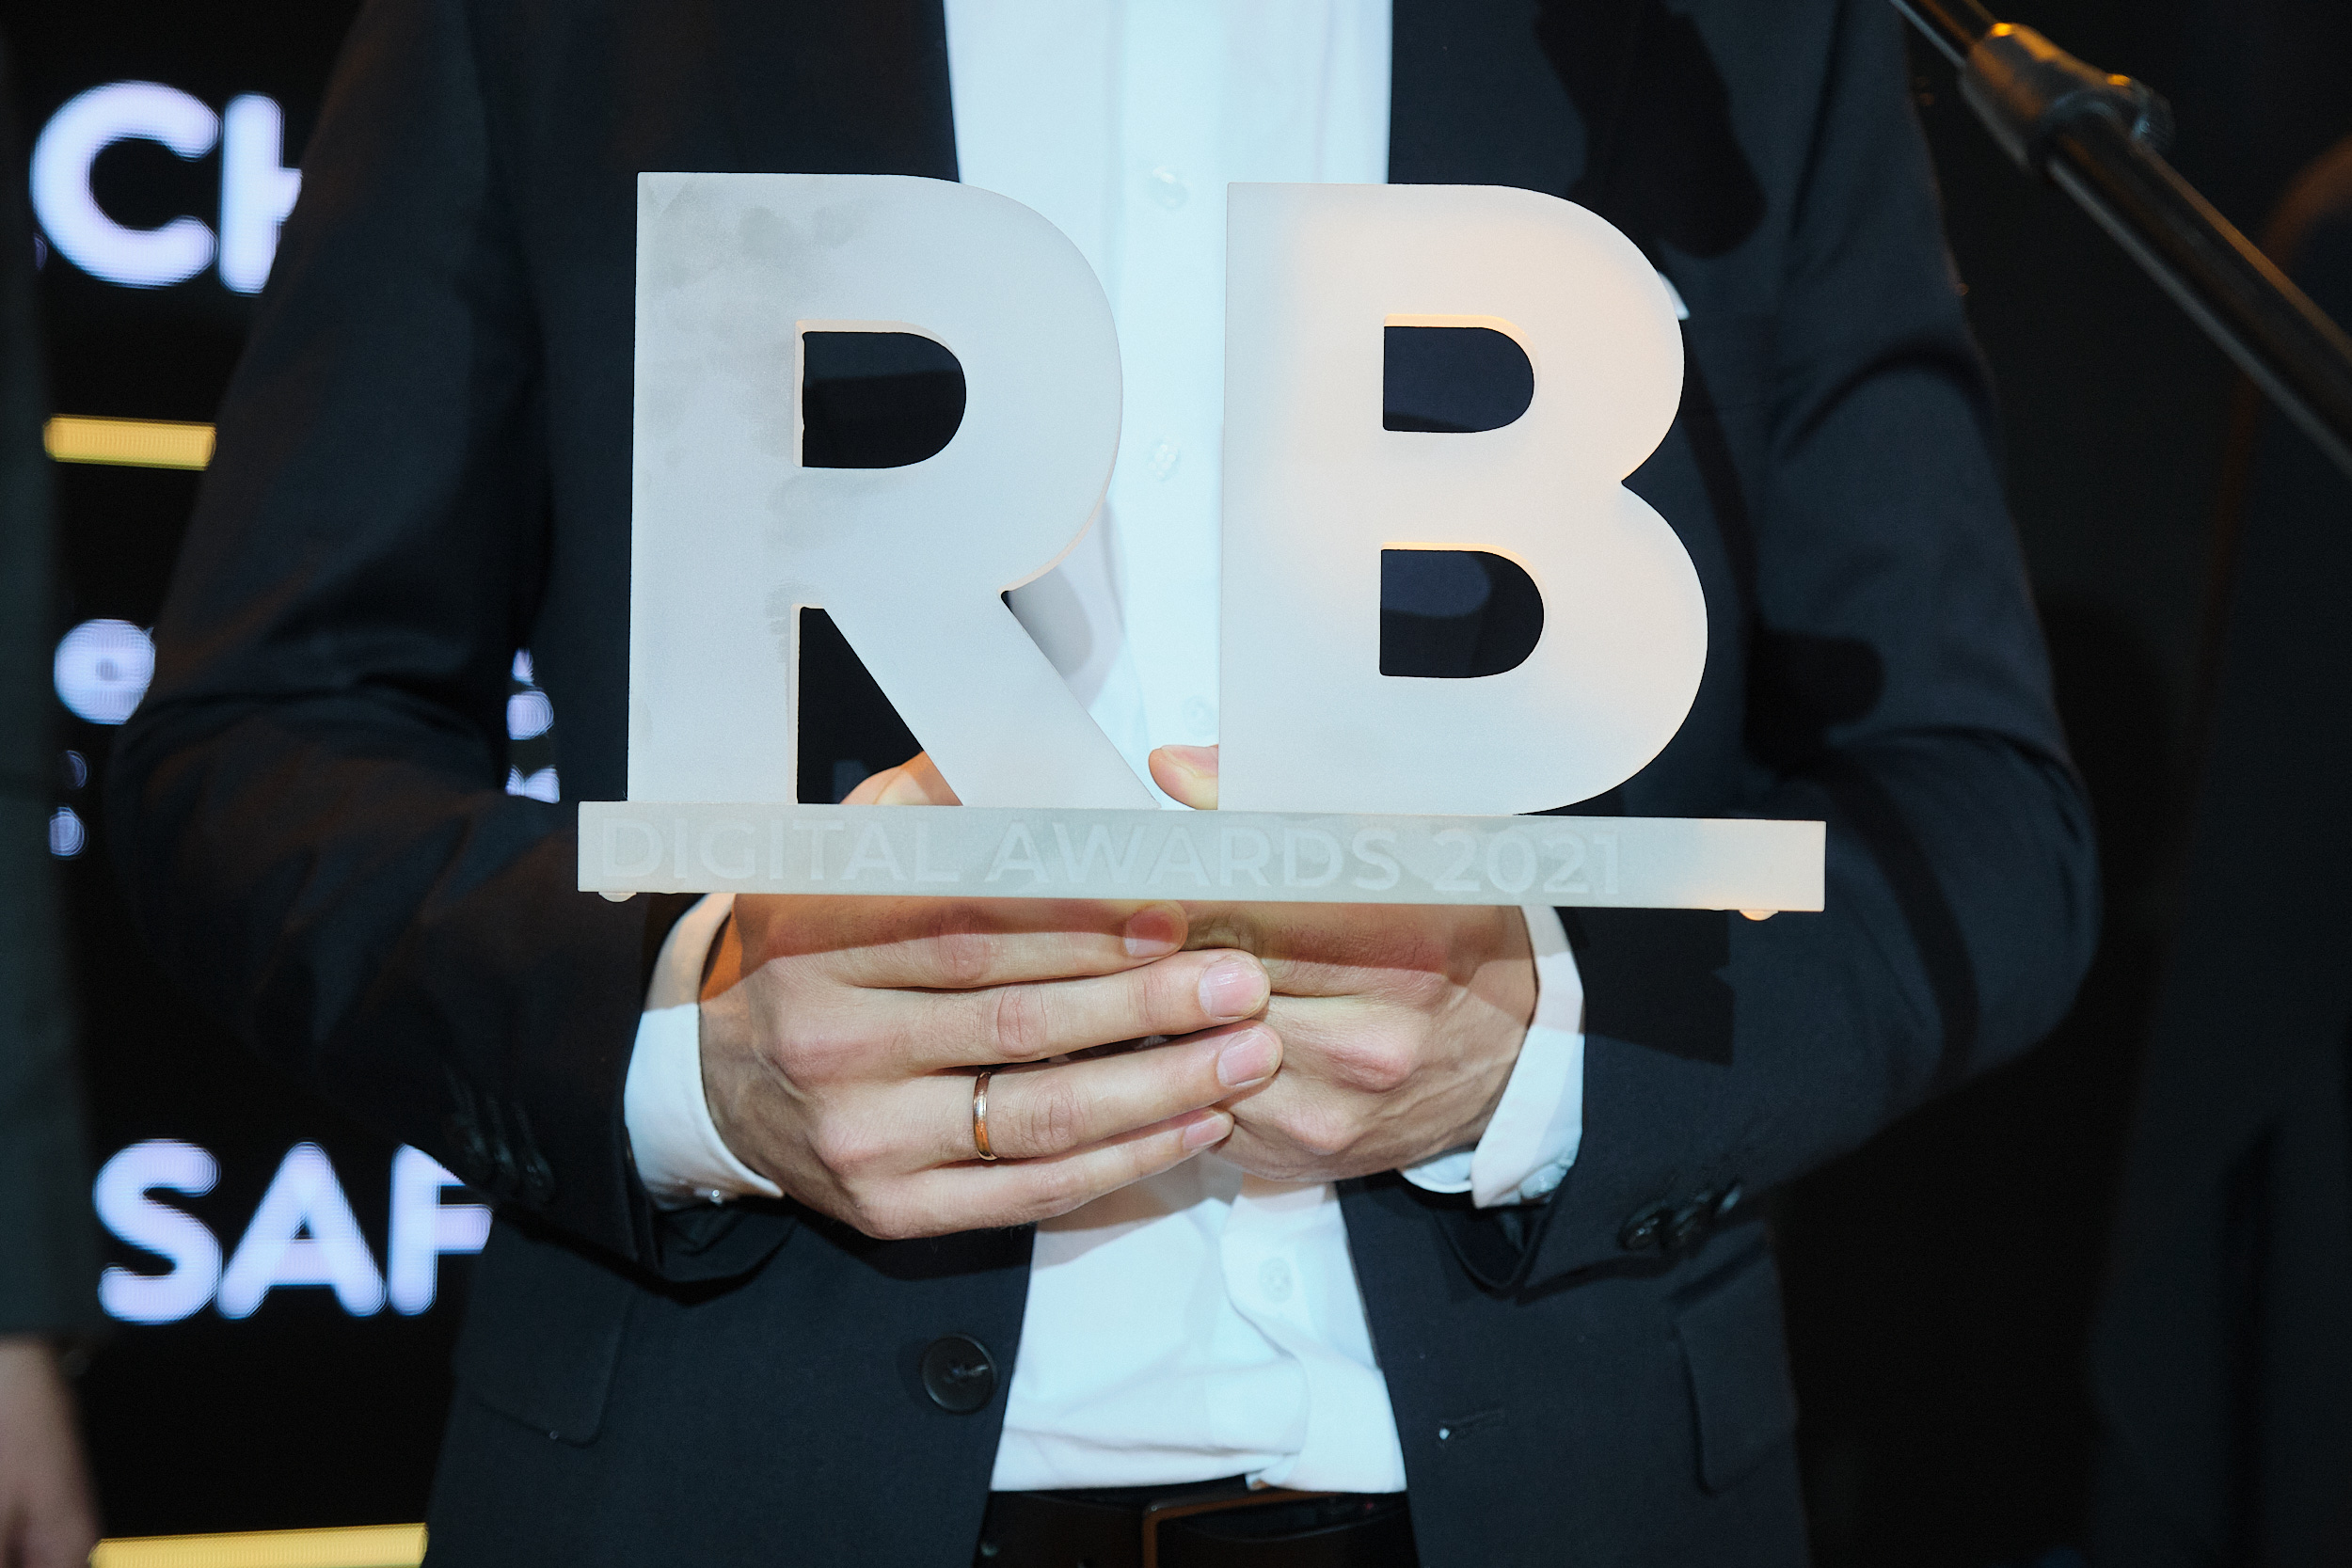 RB Digital Awards 2021